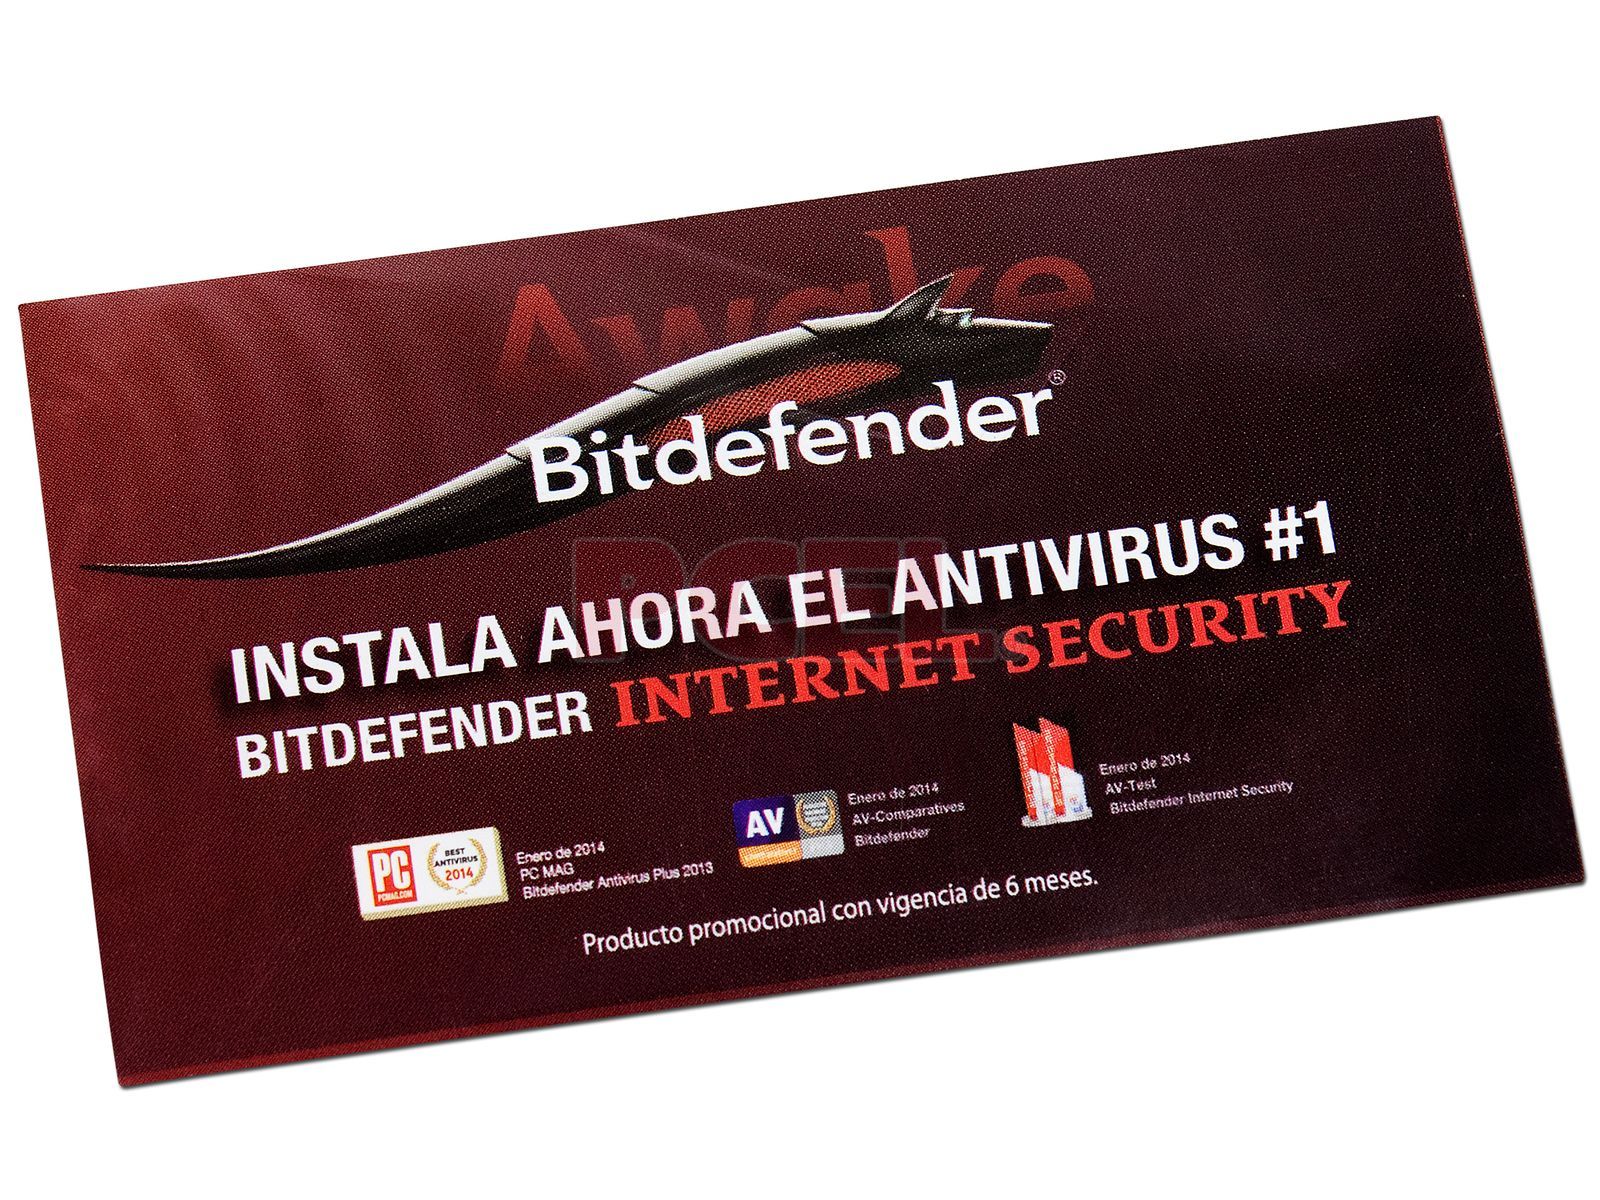 best antivirus for internet security 2014